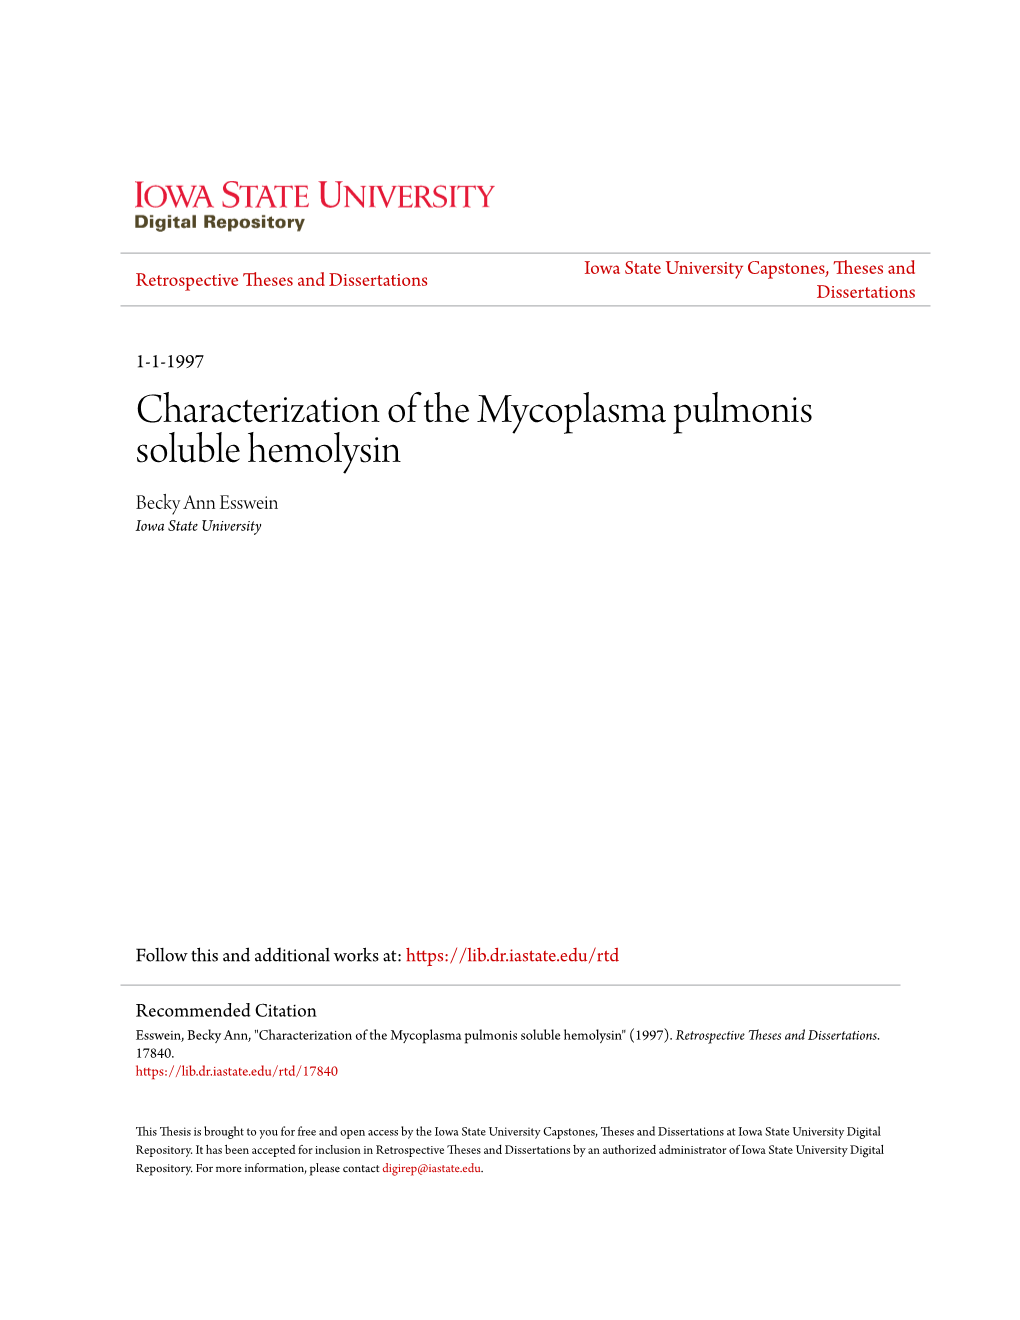 Characterization of the Mycoplasma Pulmonis Soluble Hemolysin Becky Ann Esswein Iowa State University